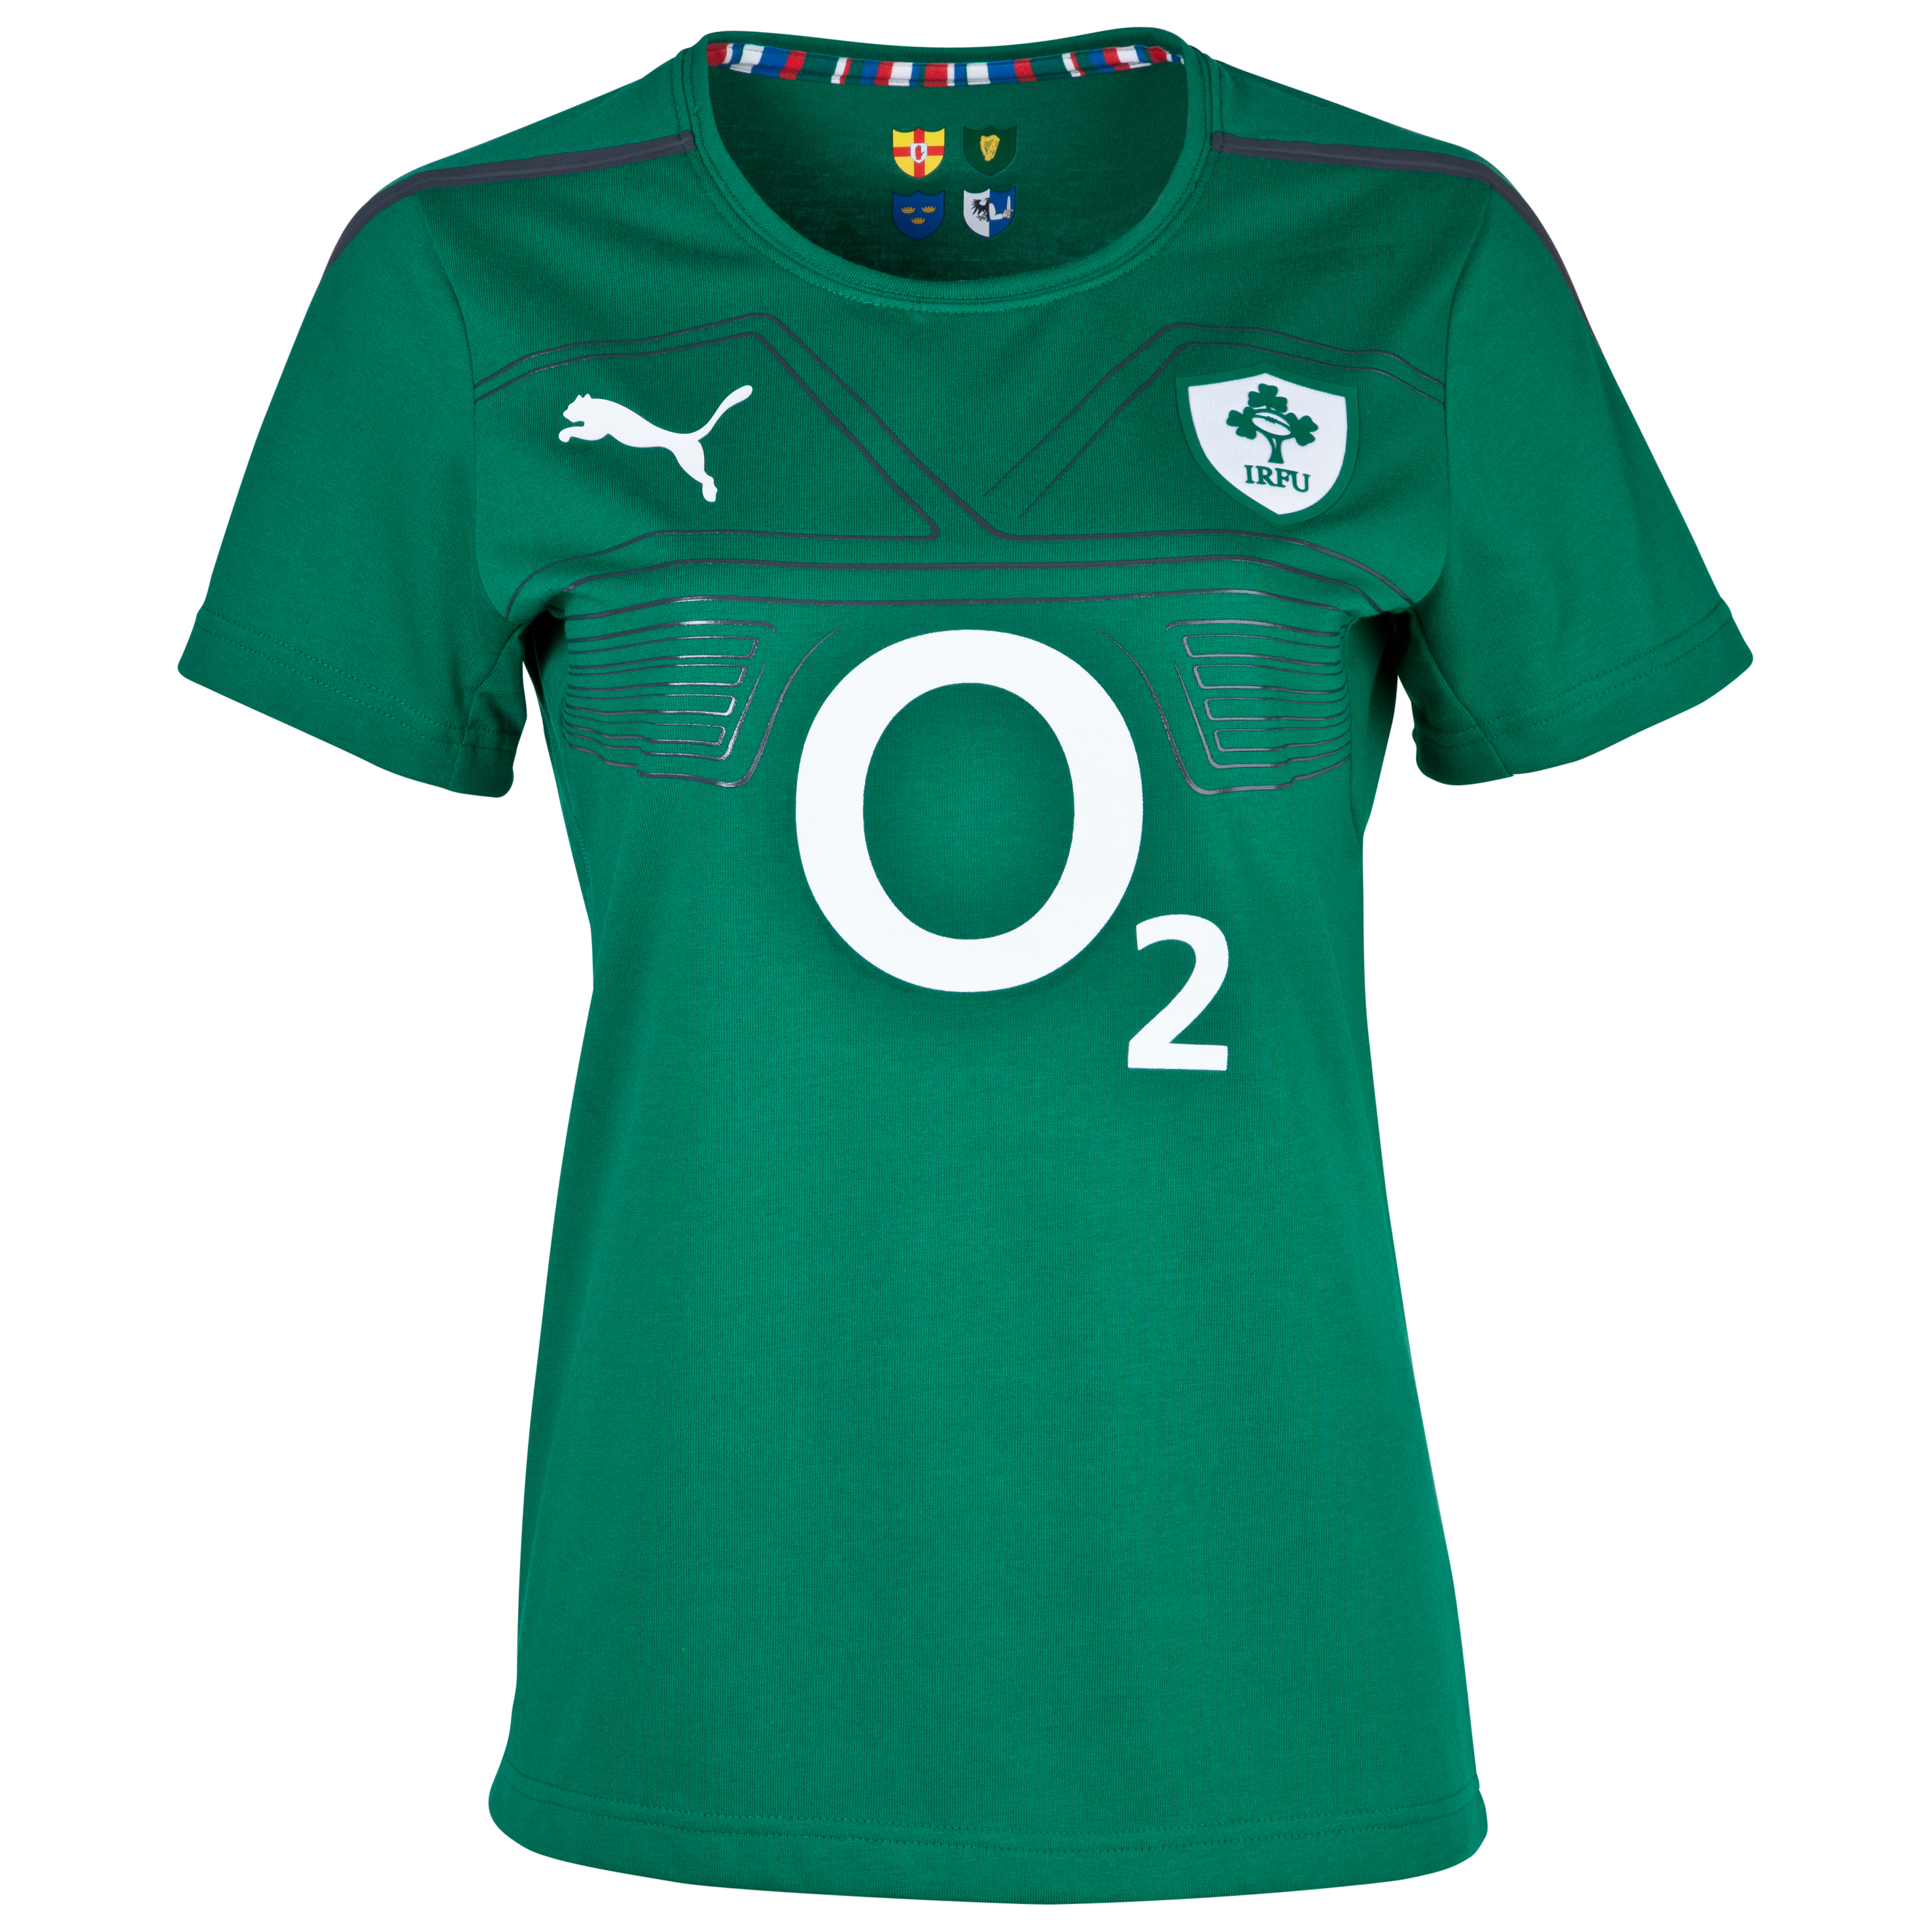 Ireland Home Shirt 2013/14 - Womens